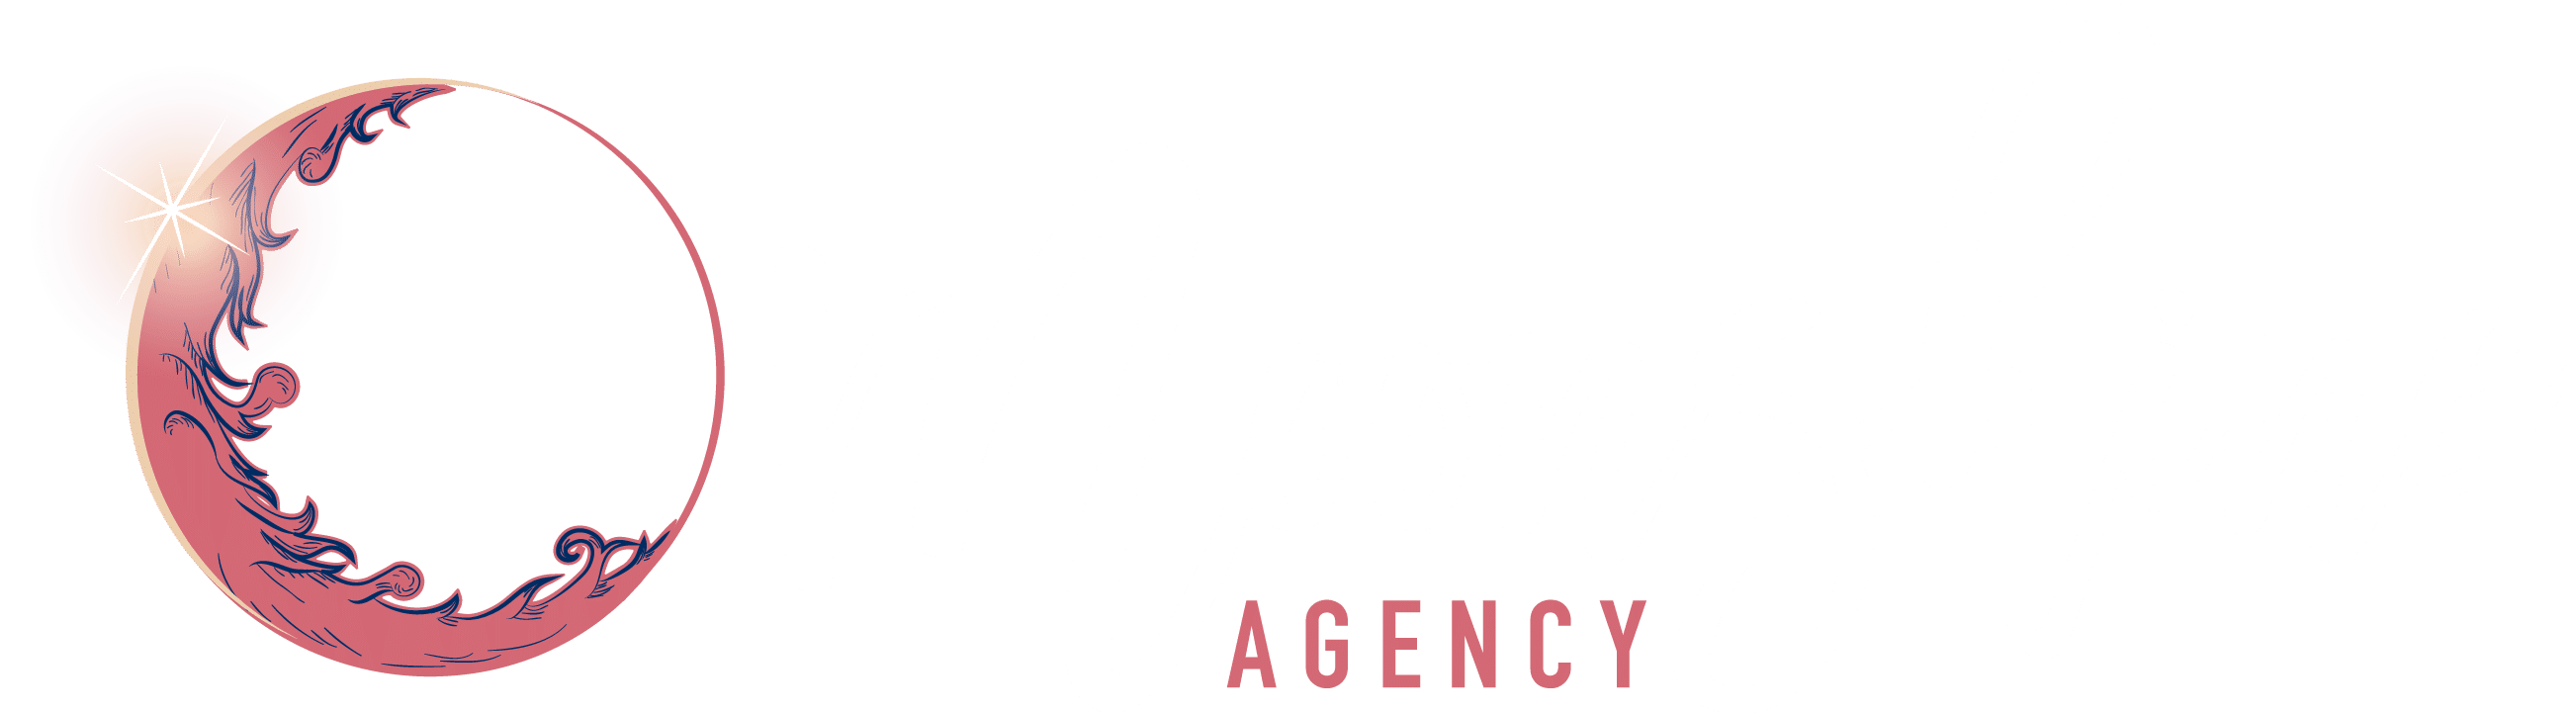 Moonshine Agency Logo